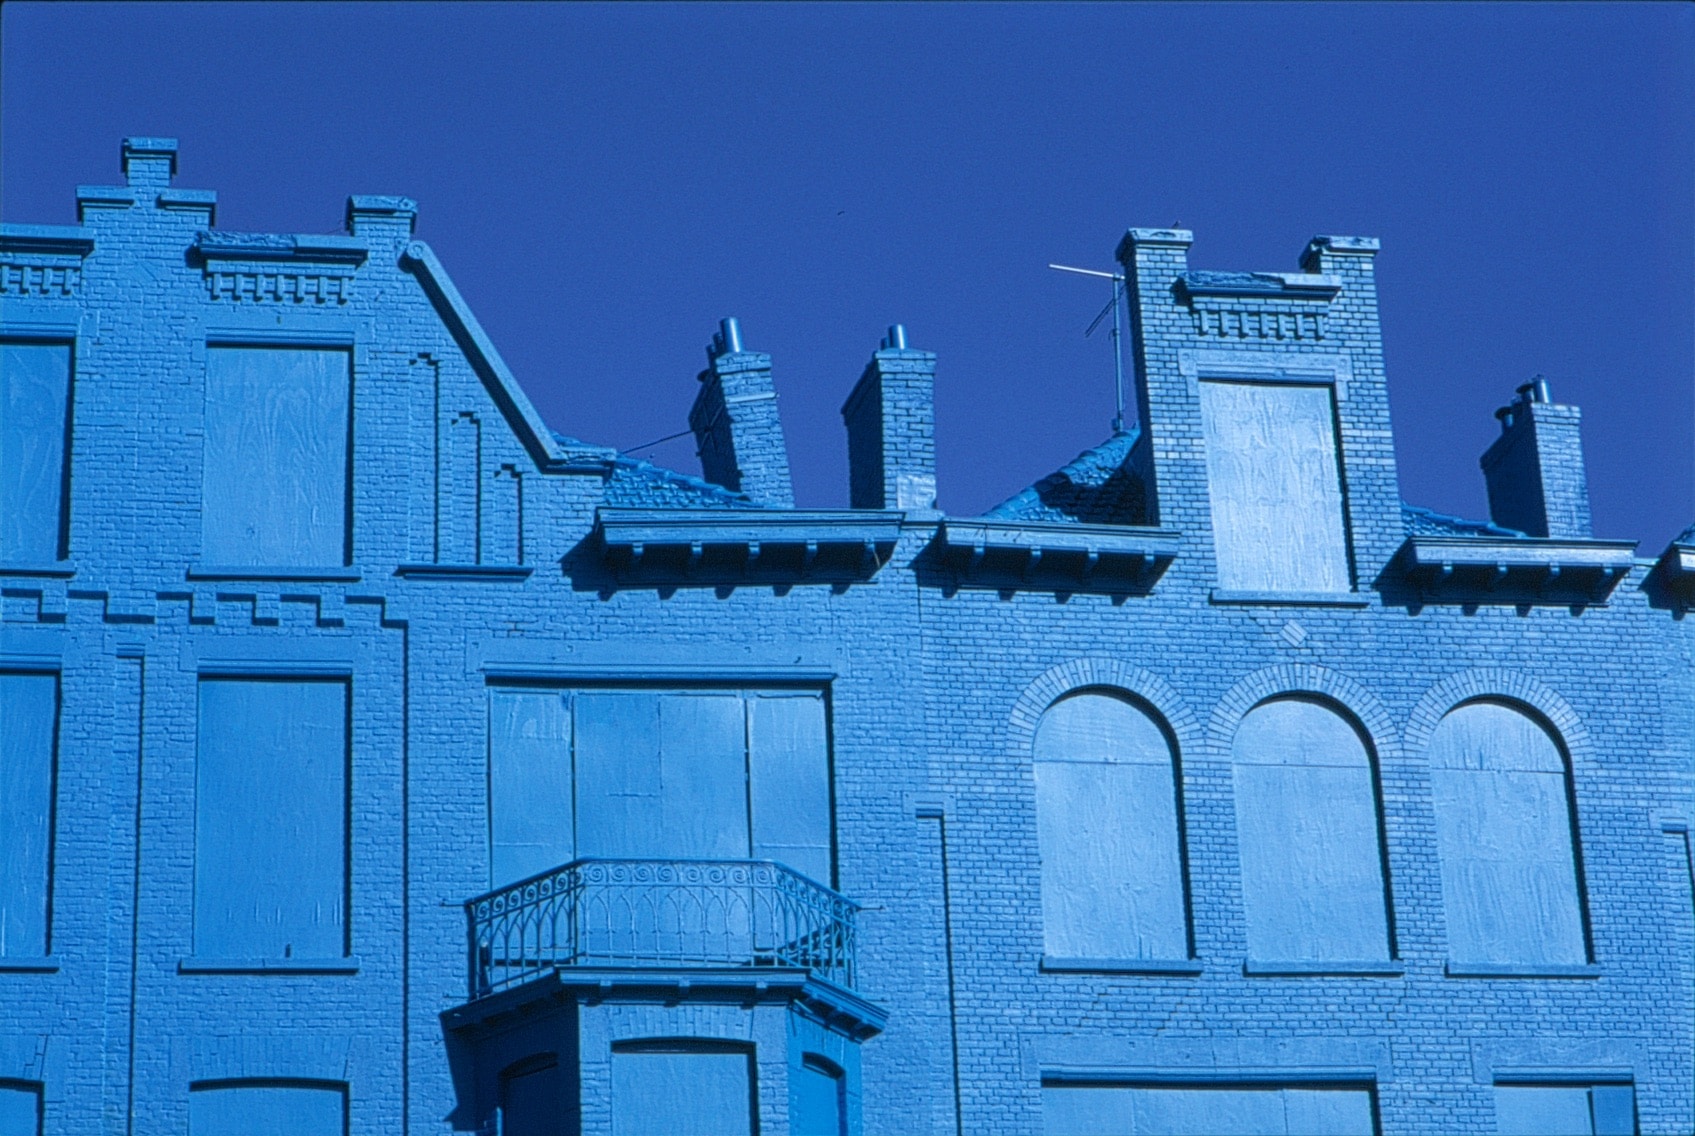 Beukelsblauw in Rotterdam by Florentijn Hofman